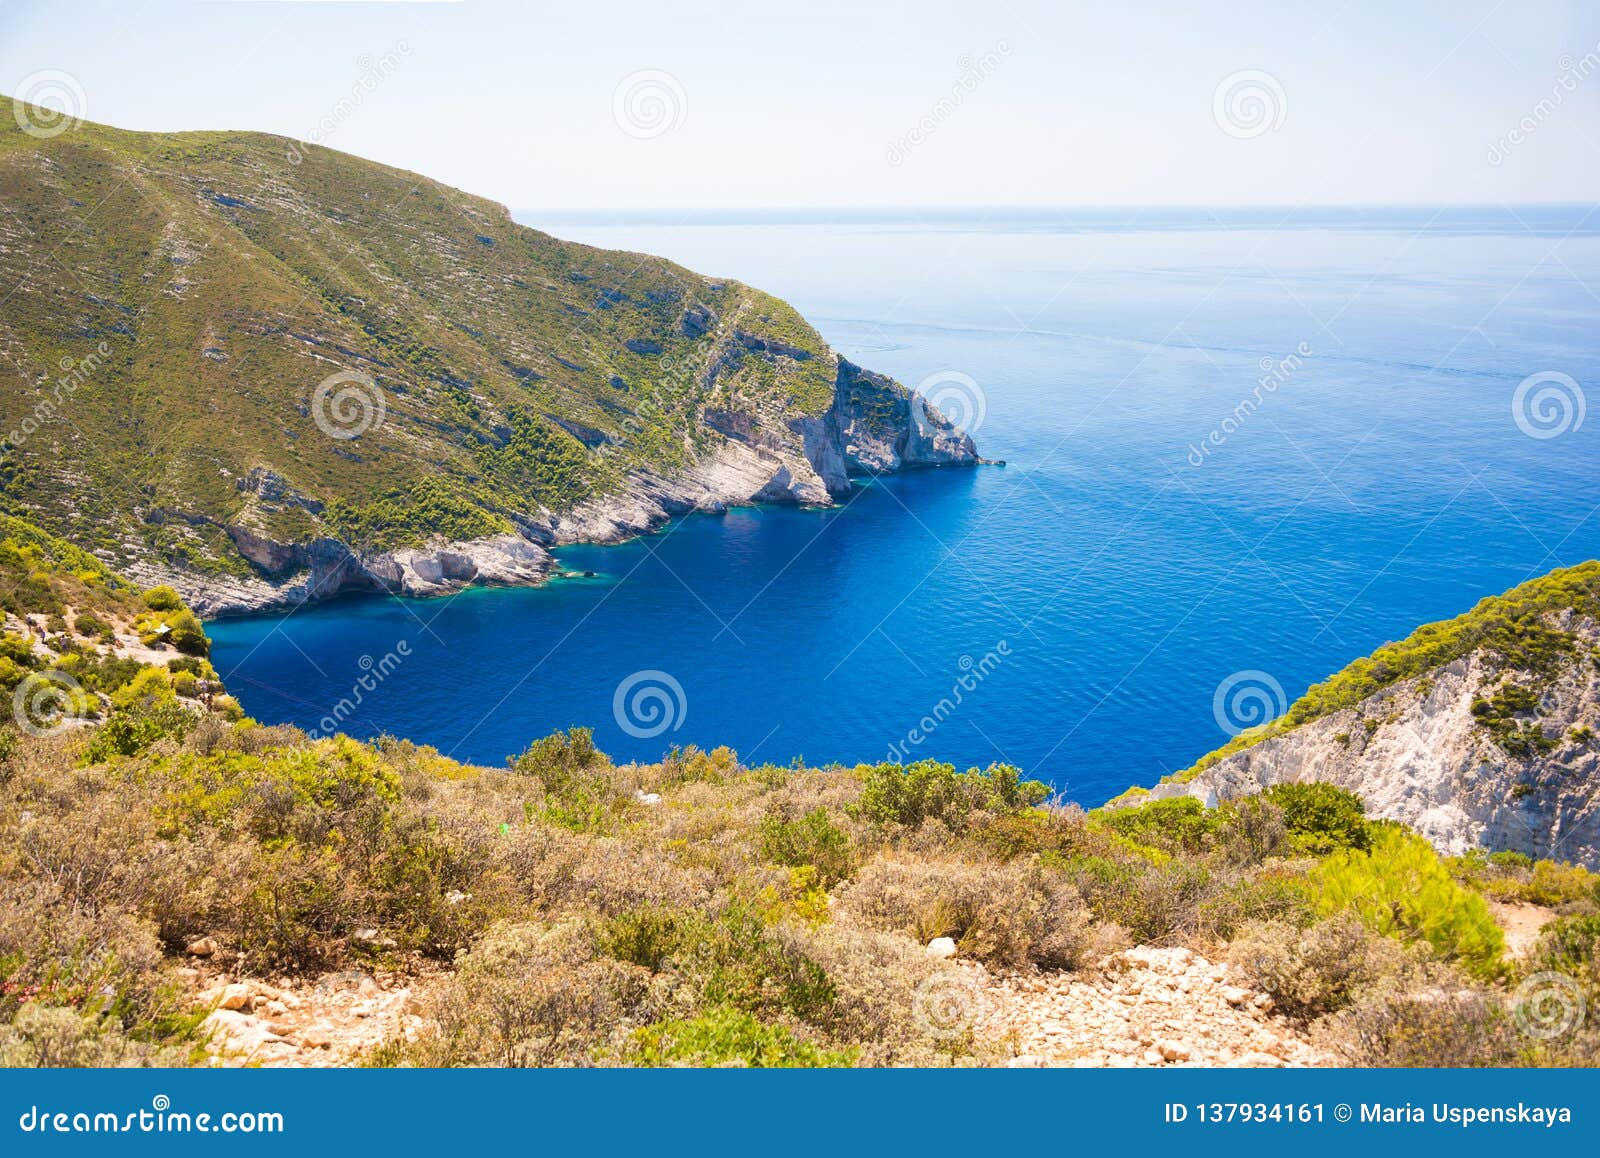 Picturesque Bay on Mediterranean Sea Coast in Greece Stock Image ...